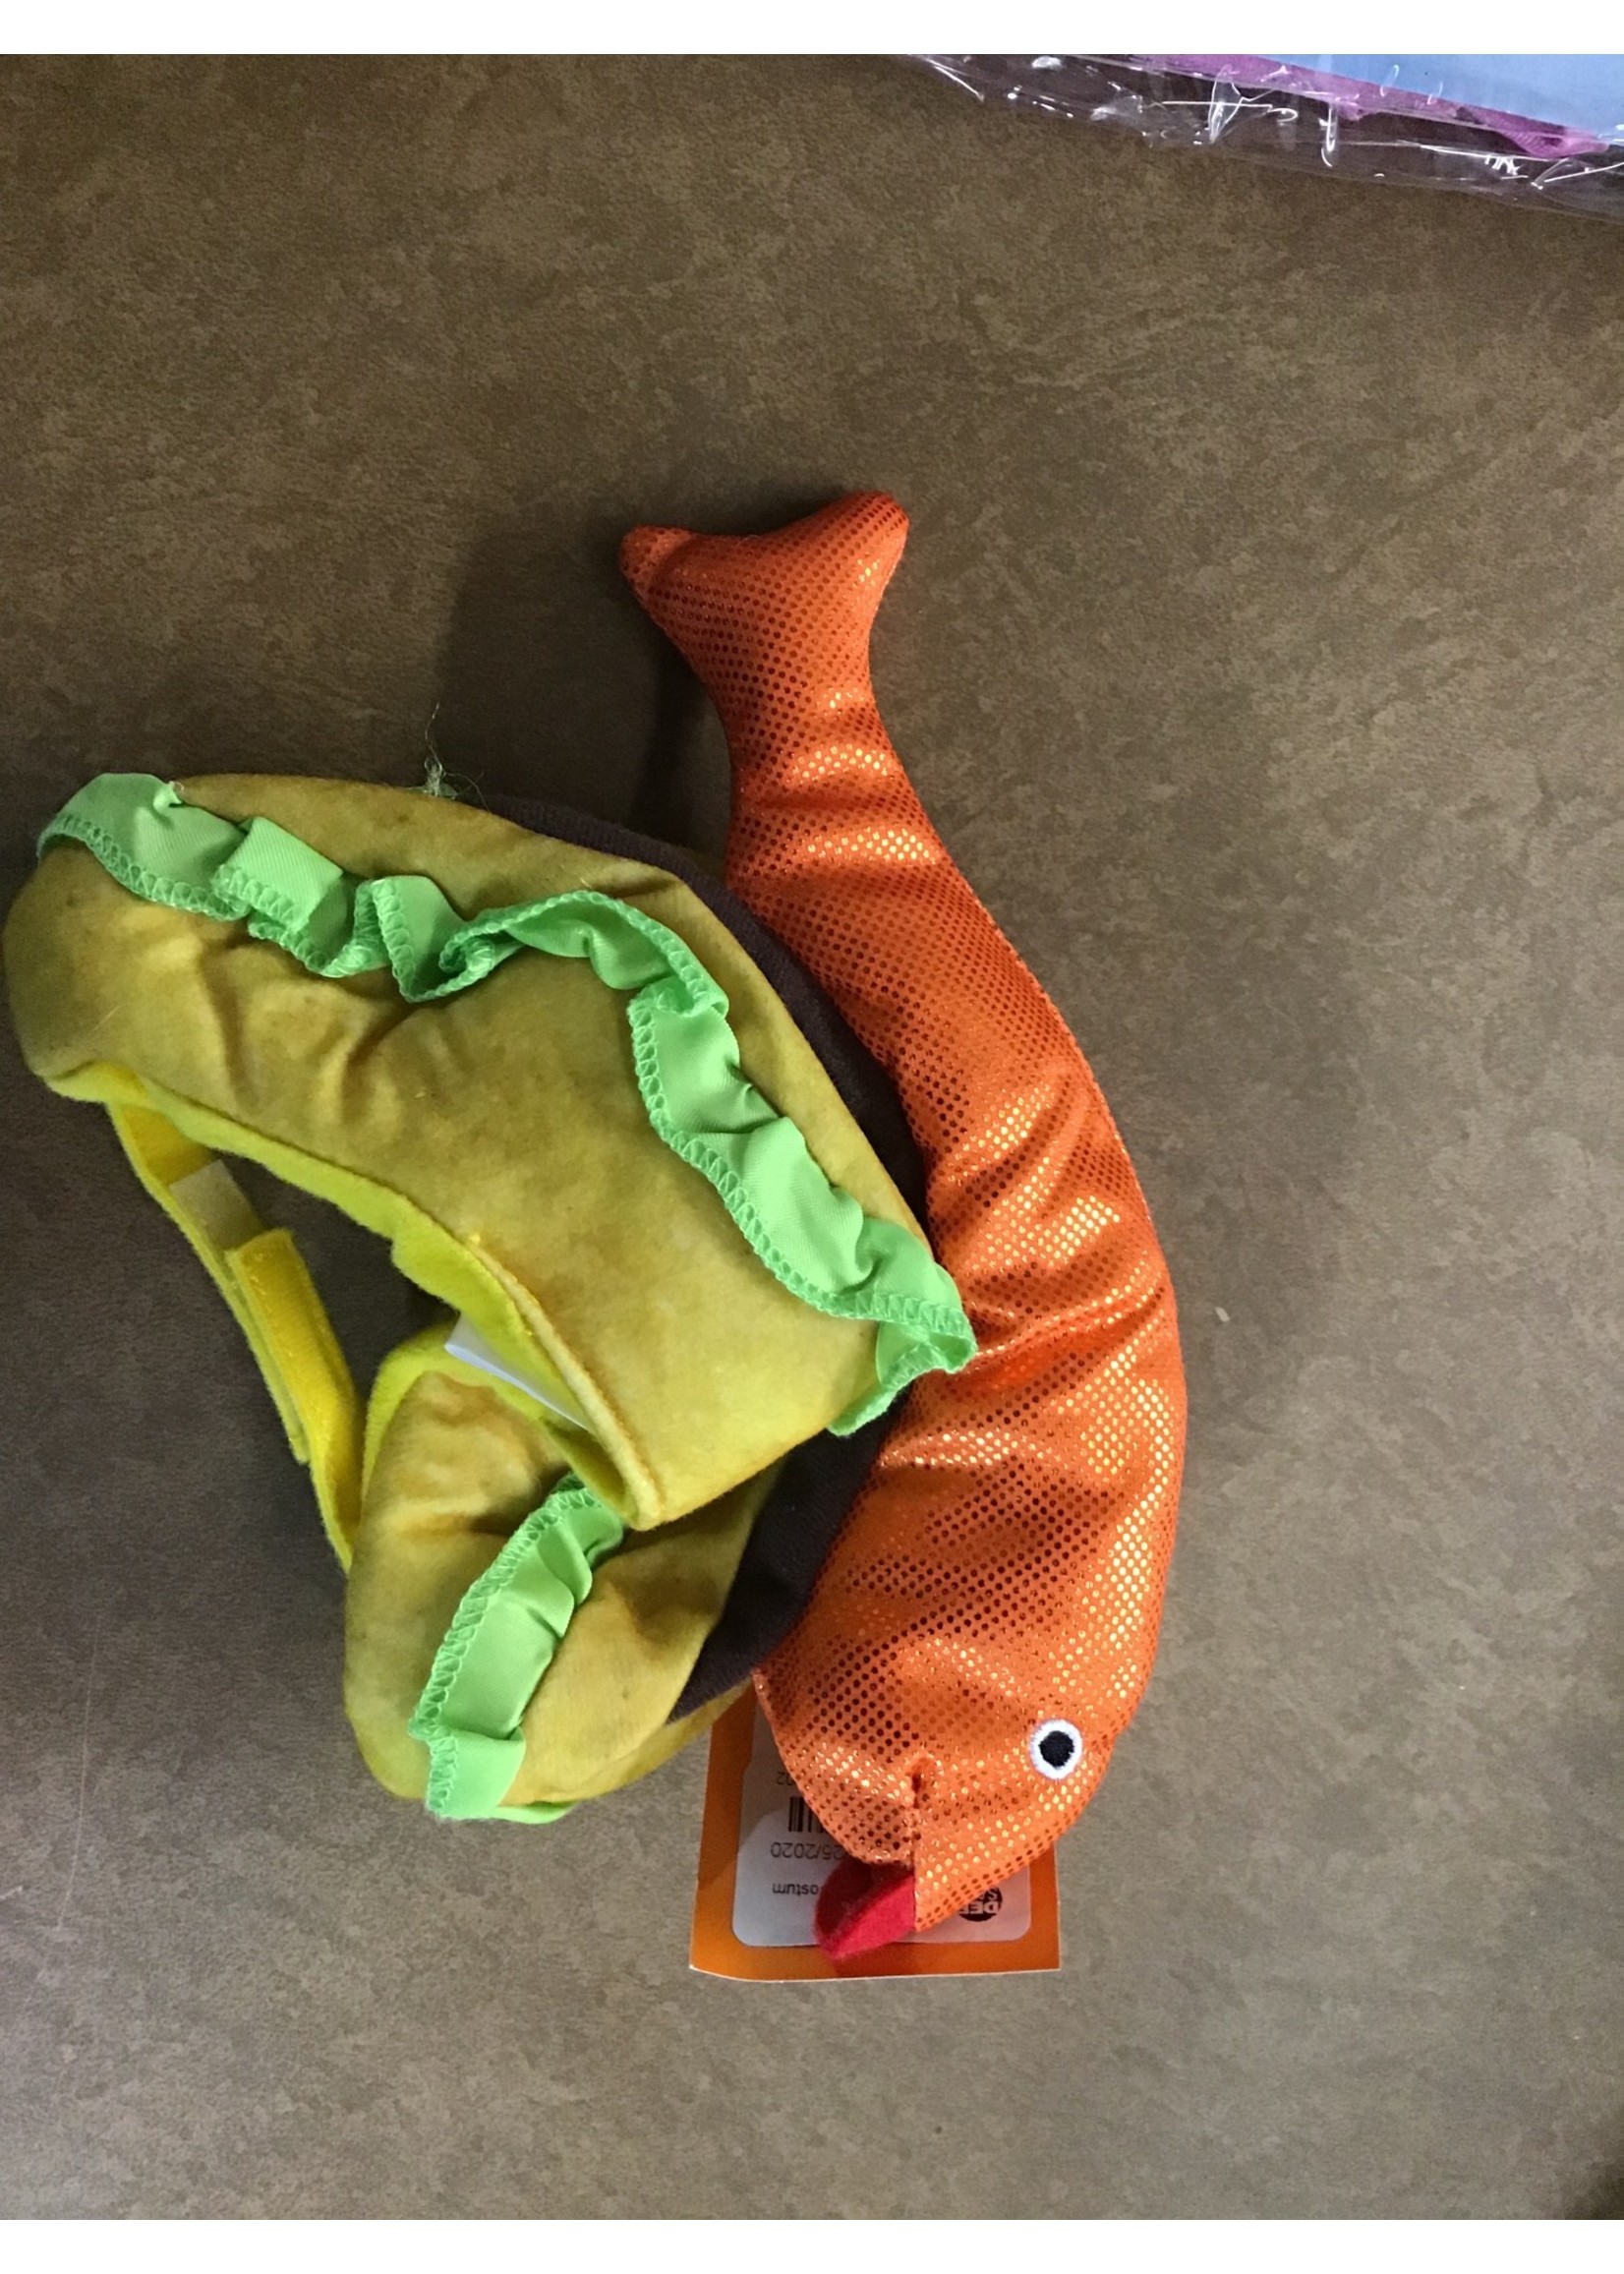 Fish Taco Headpiece Halloween Cat Costume - Hyde & EEK! Boutique™